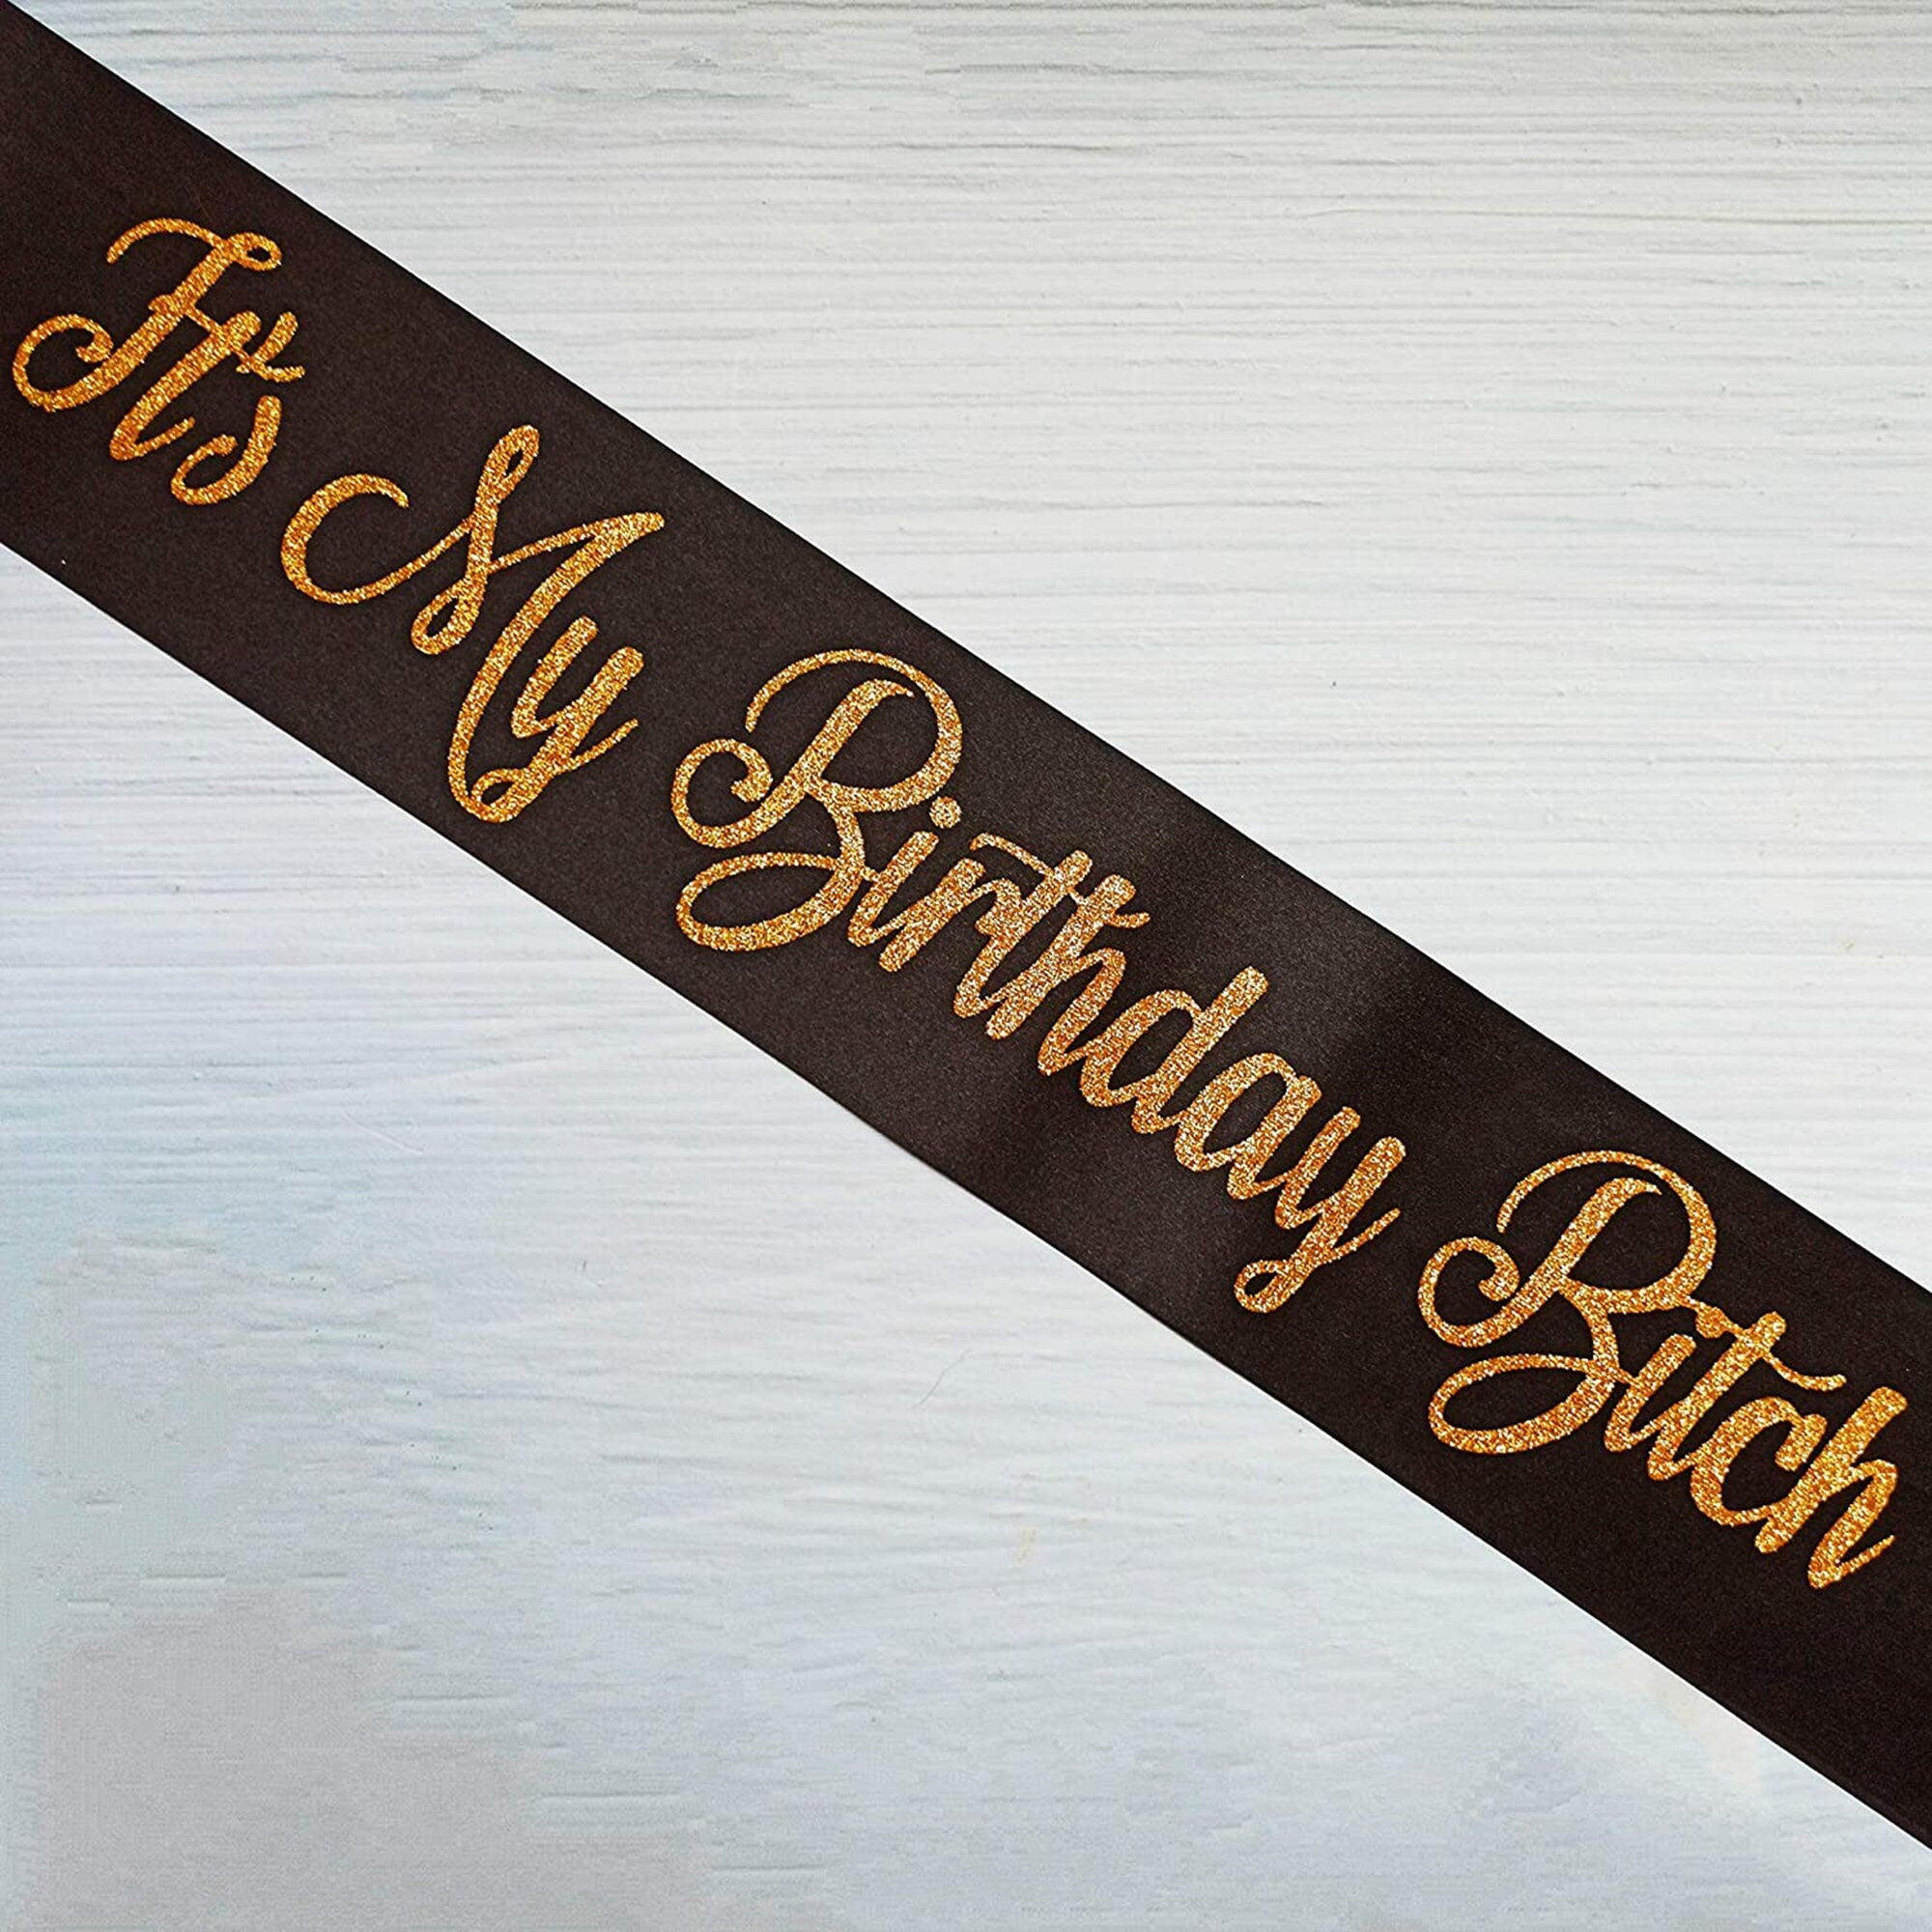 It's My Birthday Bitch Sash Gold on Black Birthday Sash Fun Birthday Night Party Celebration Birthday Girl